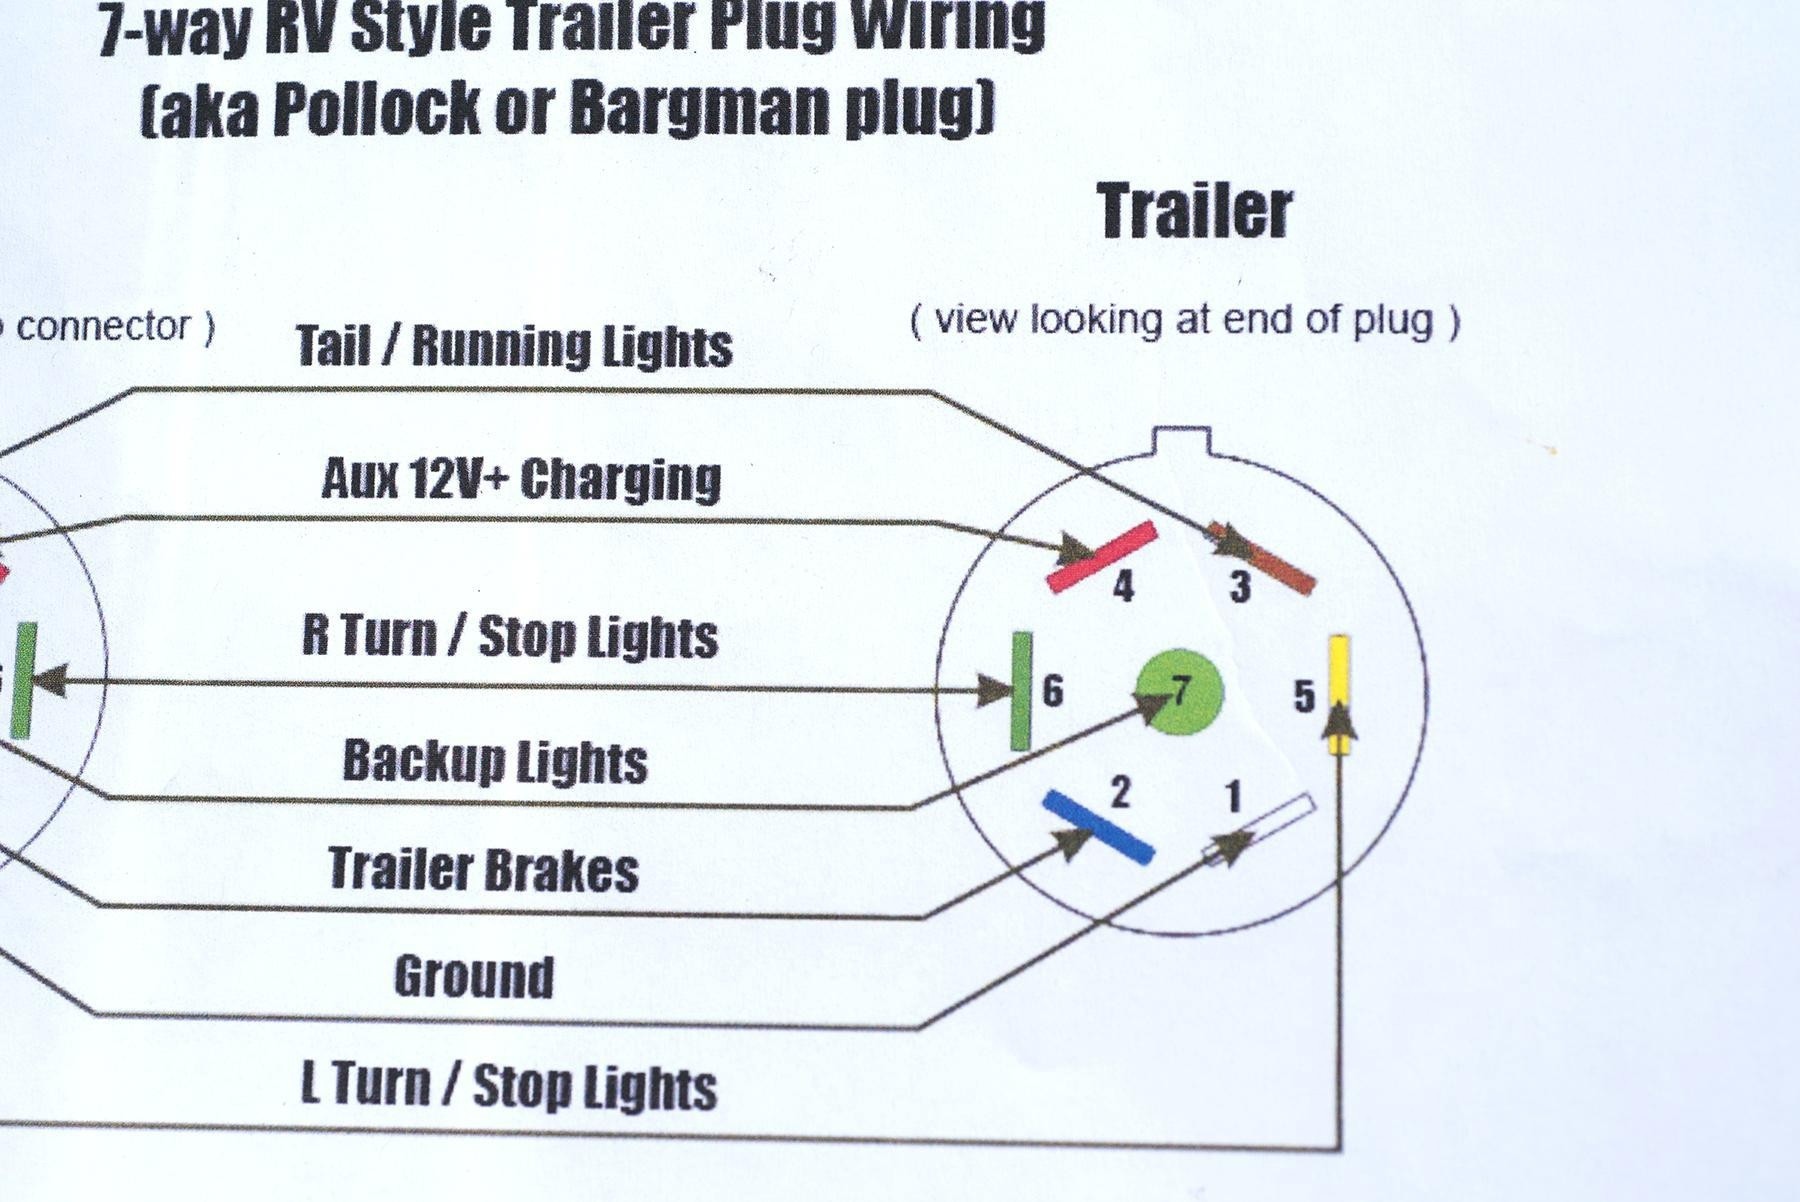 Seven Pin Trailer Wiring Diagram Australian Light Wiring Diagram New Trailer Lights Wiring Diagram Best